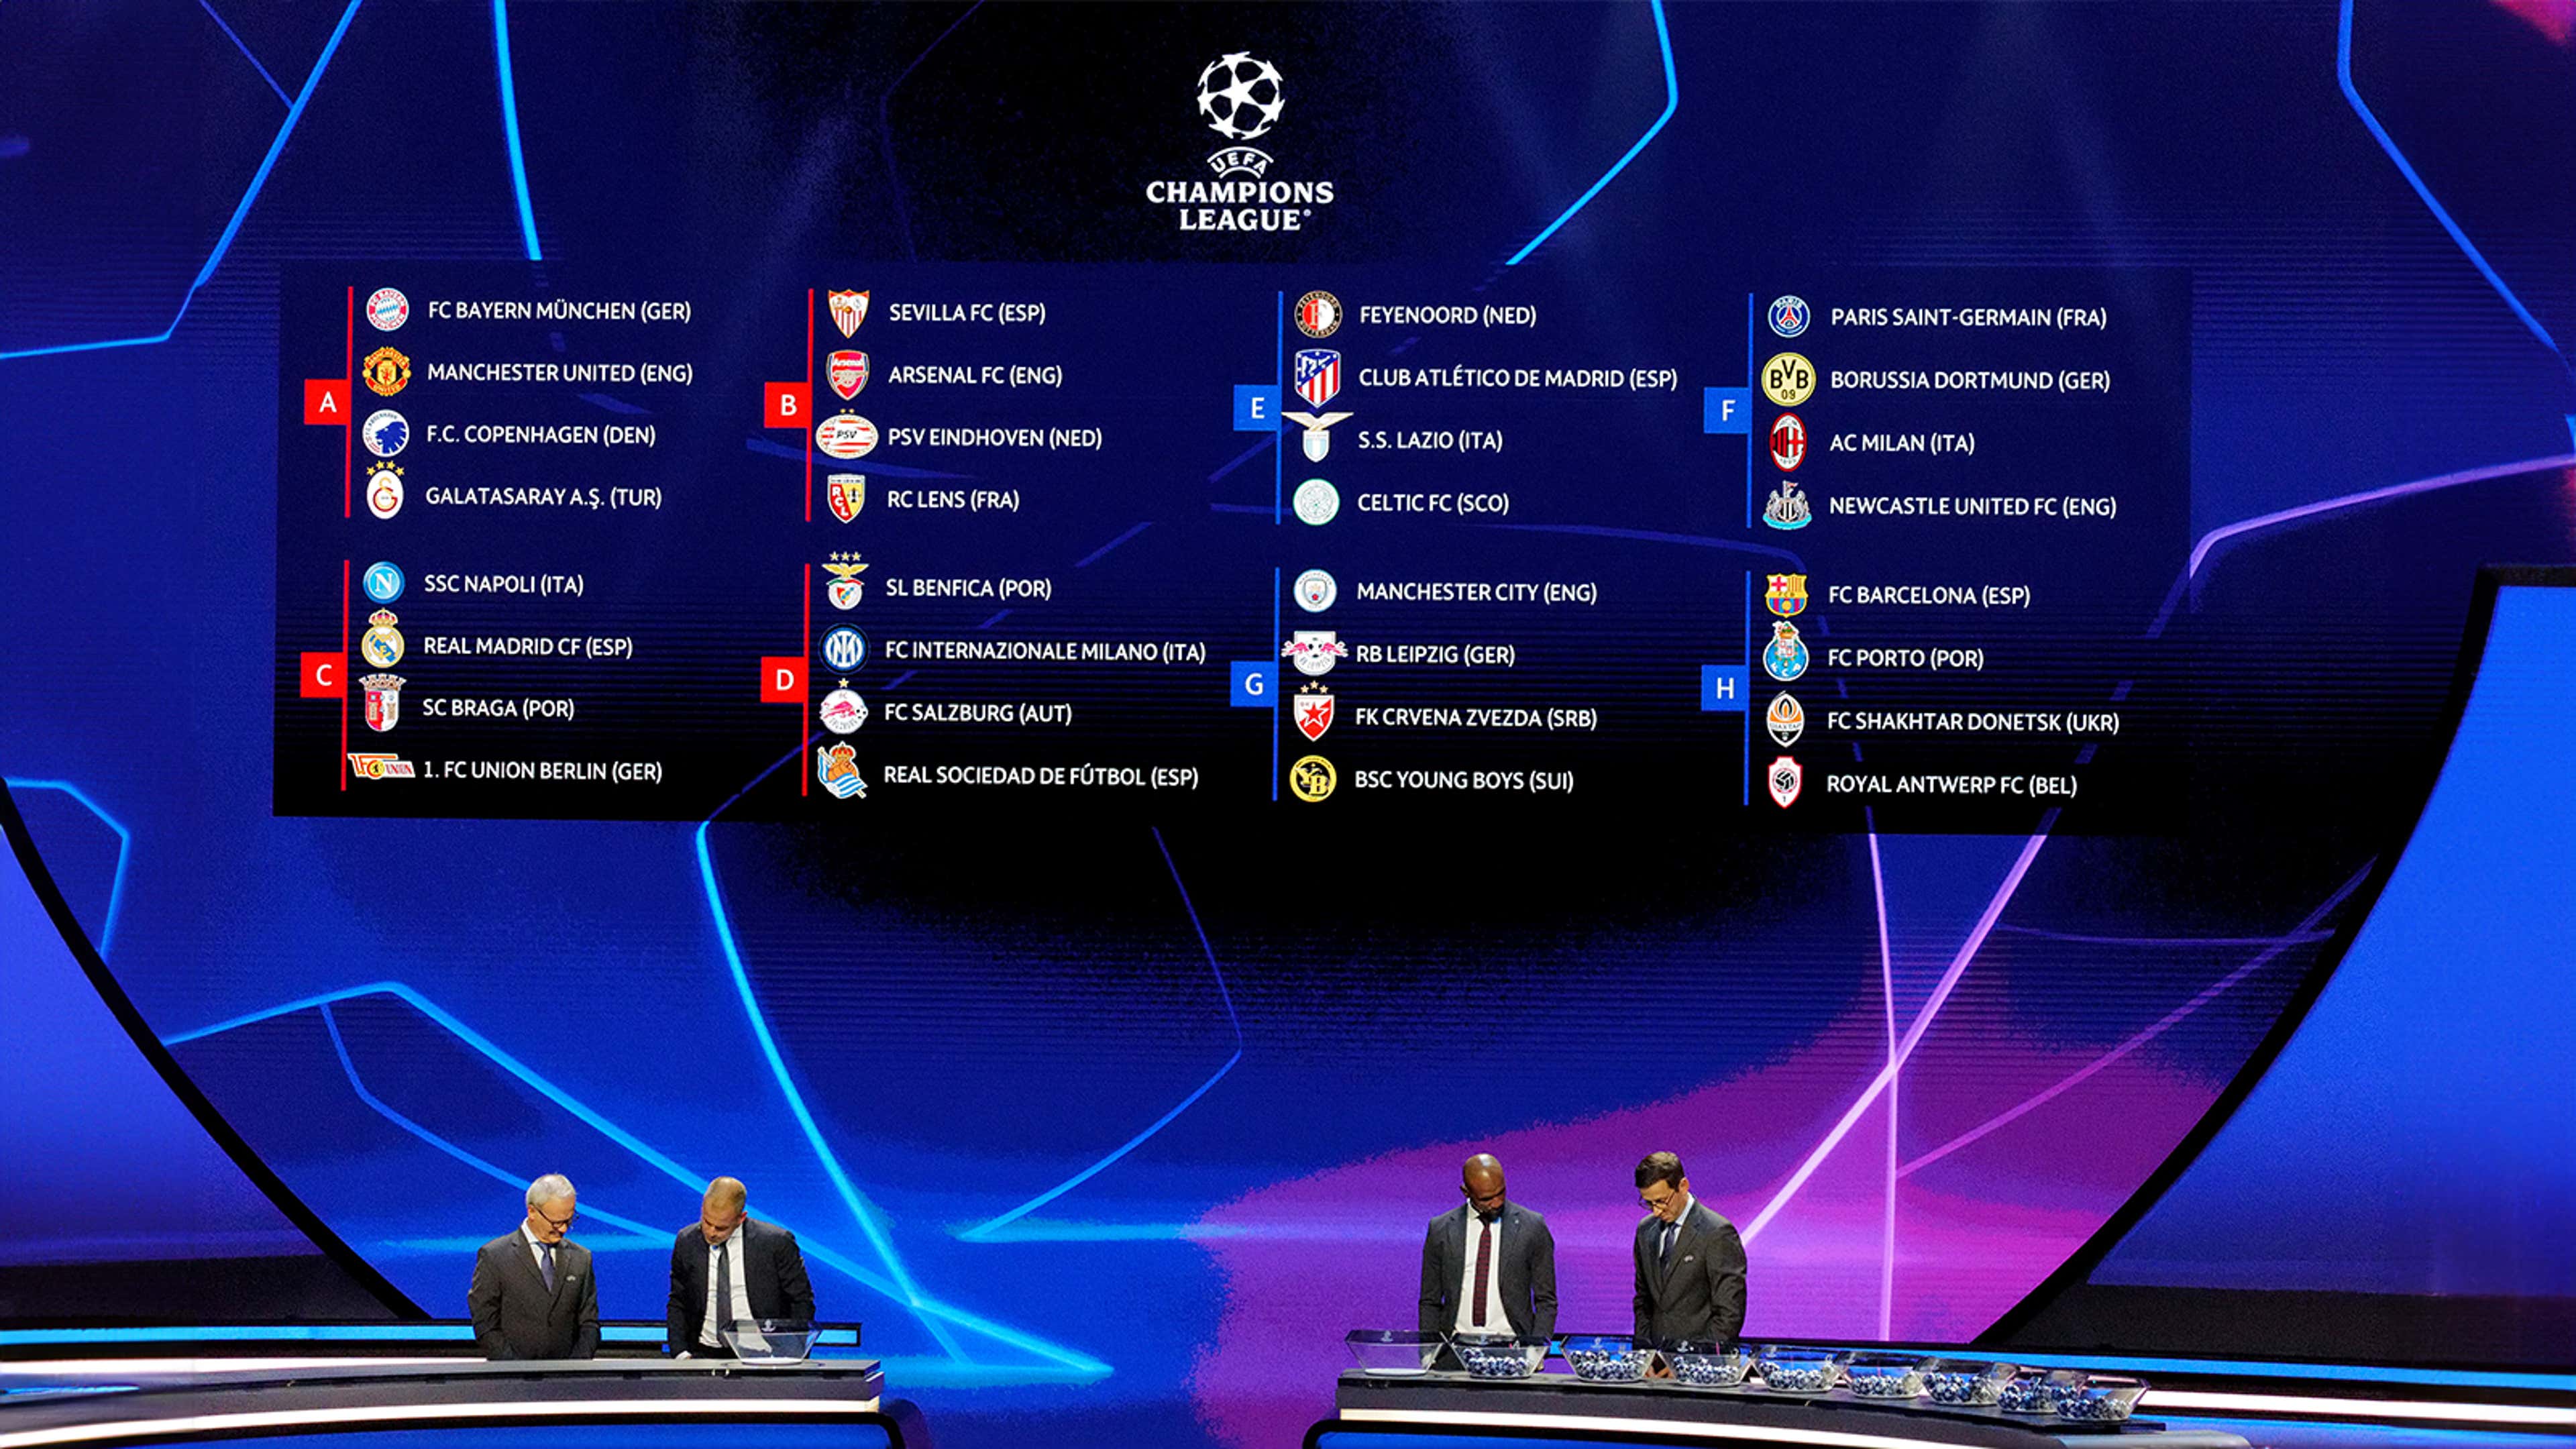  UEFA Champions League draw